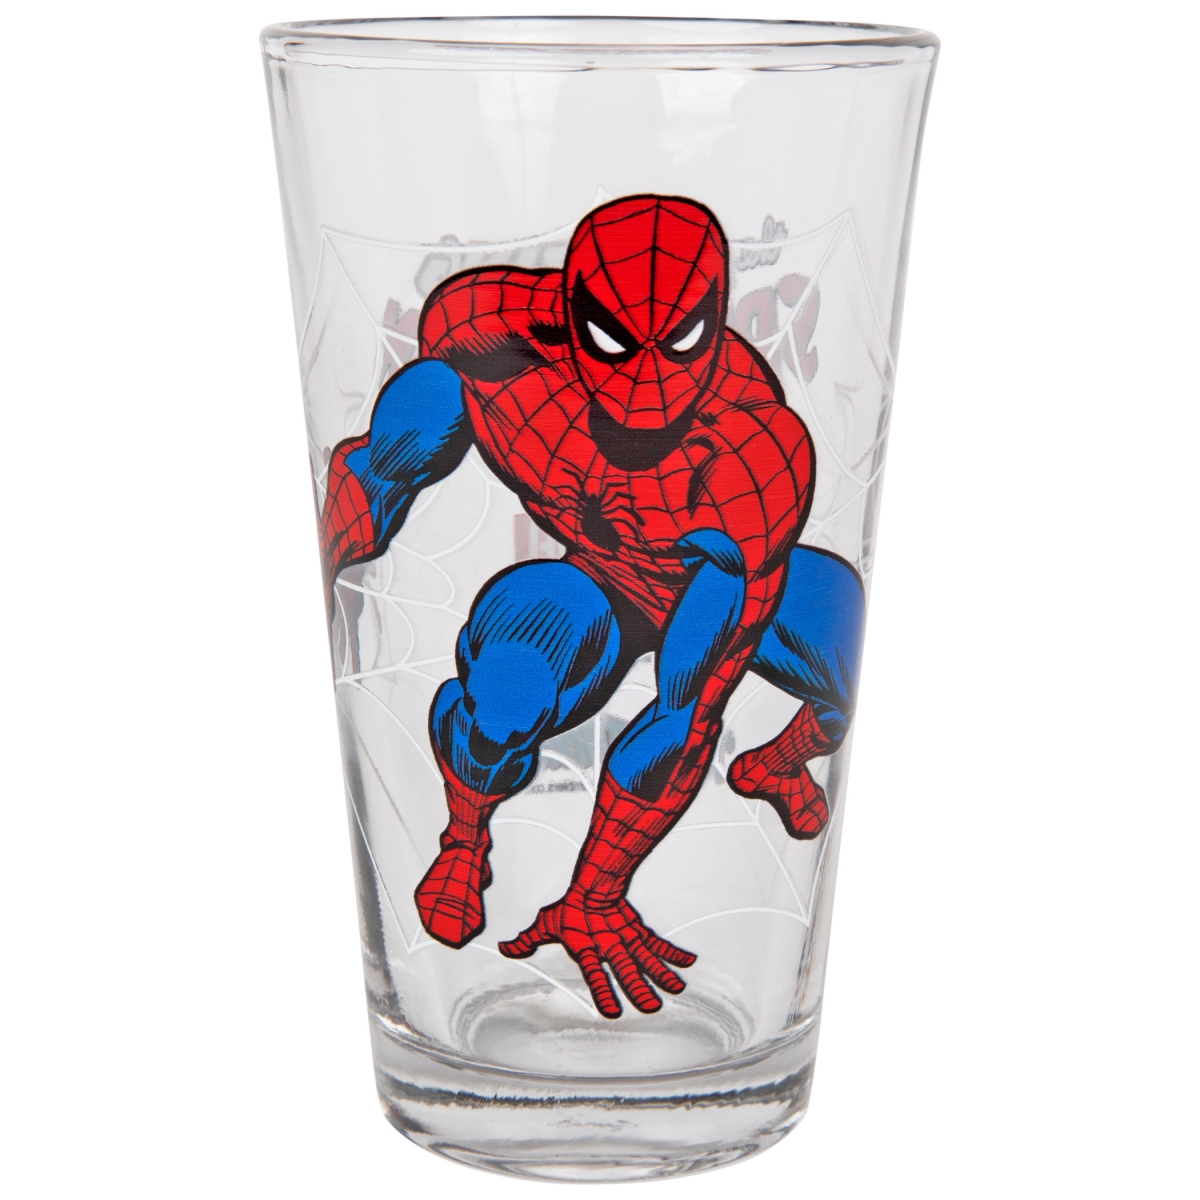 Picture of Spider-Man glasspintspdjromita Spider-Man by John Romita SR Clear Pint Glass